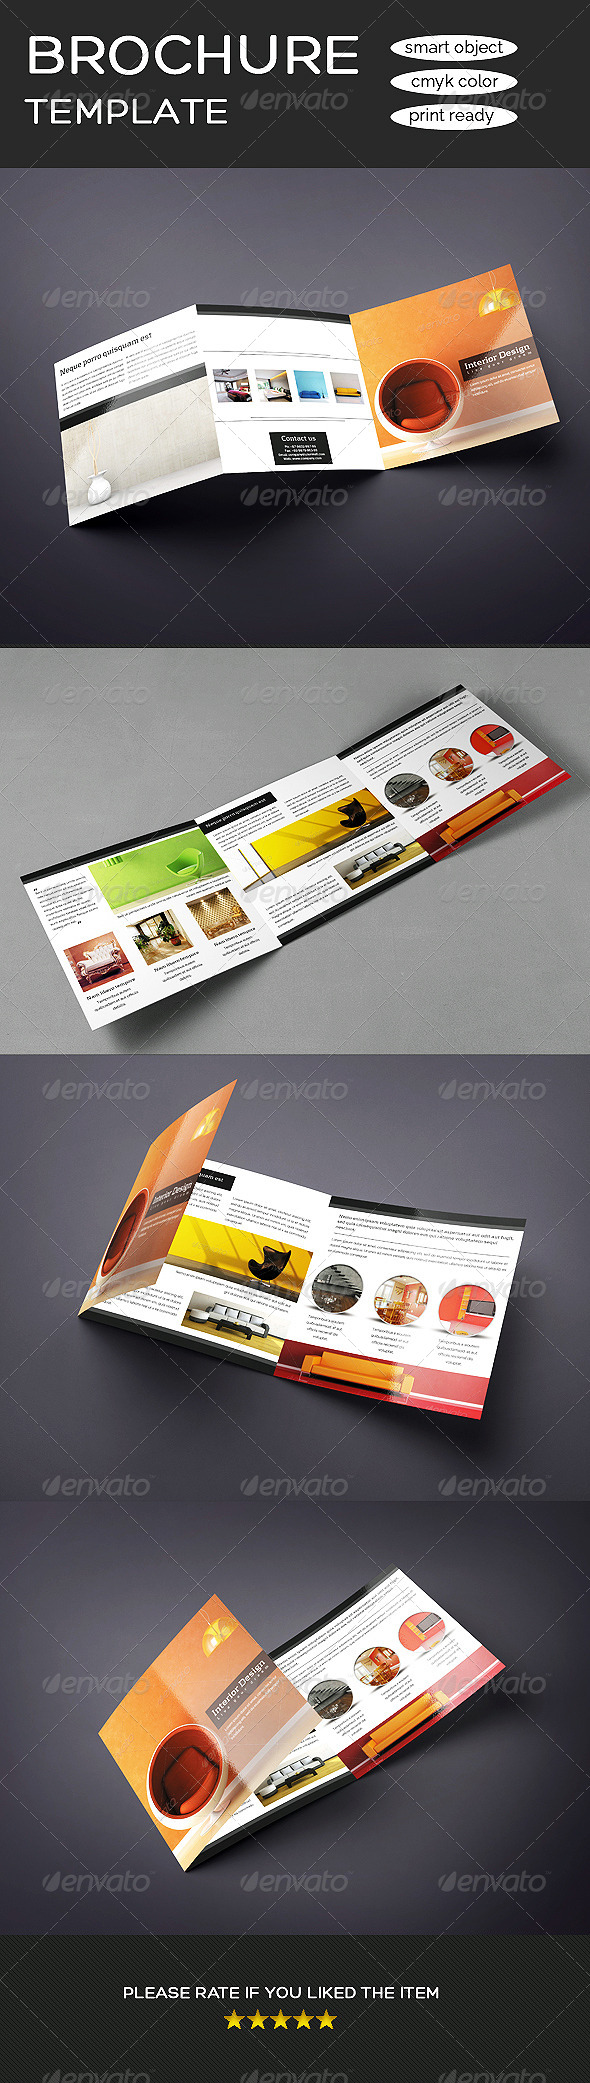 Interior Design Brochure